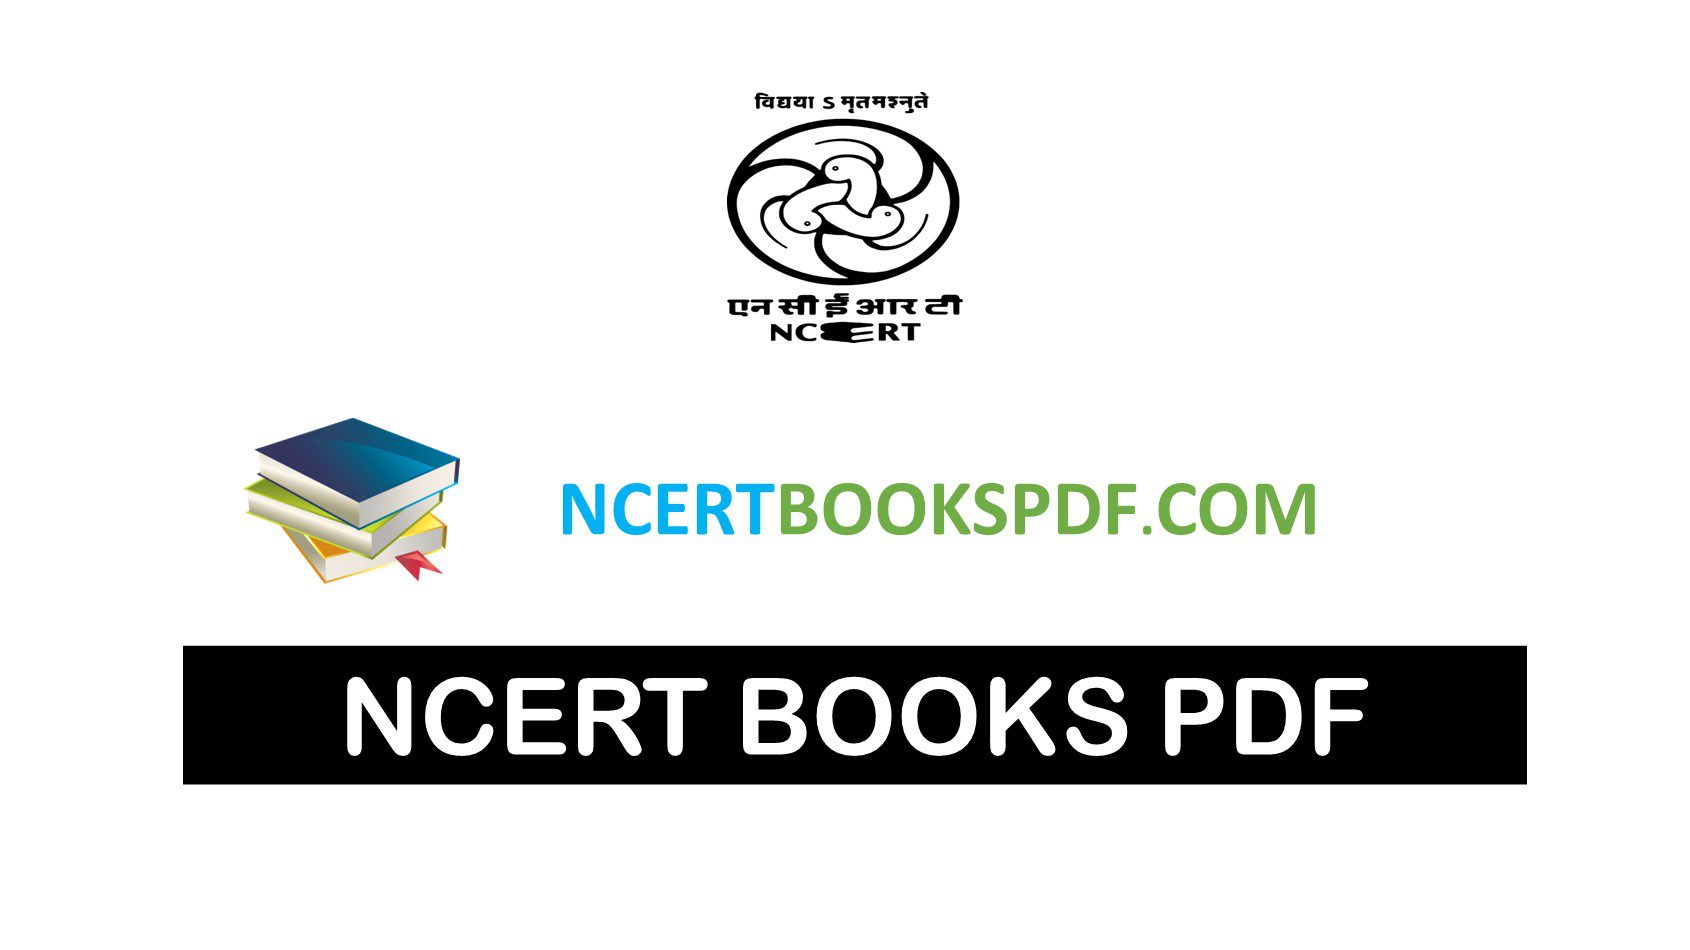 NCERT BOOKS PDF 2